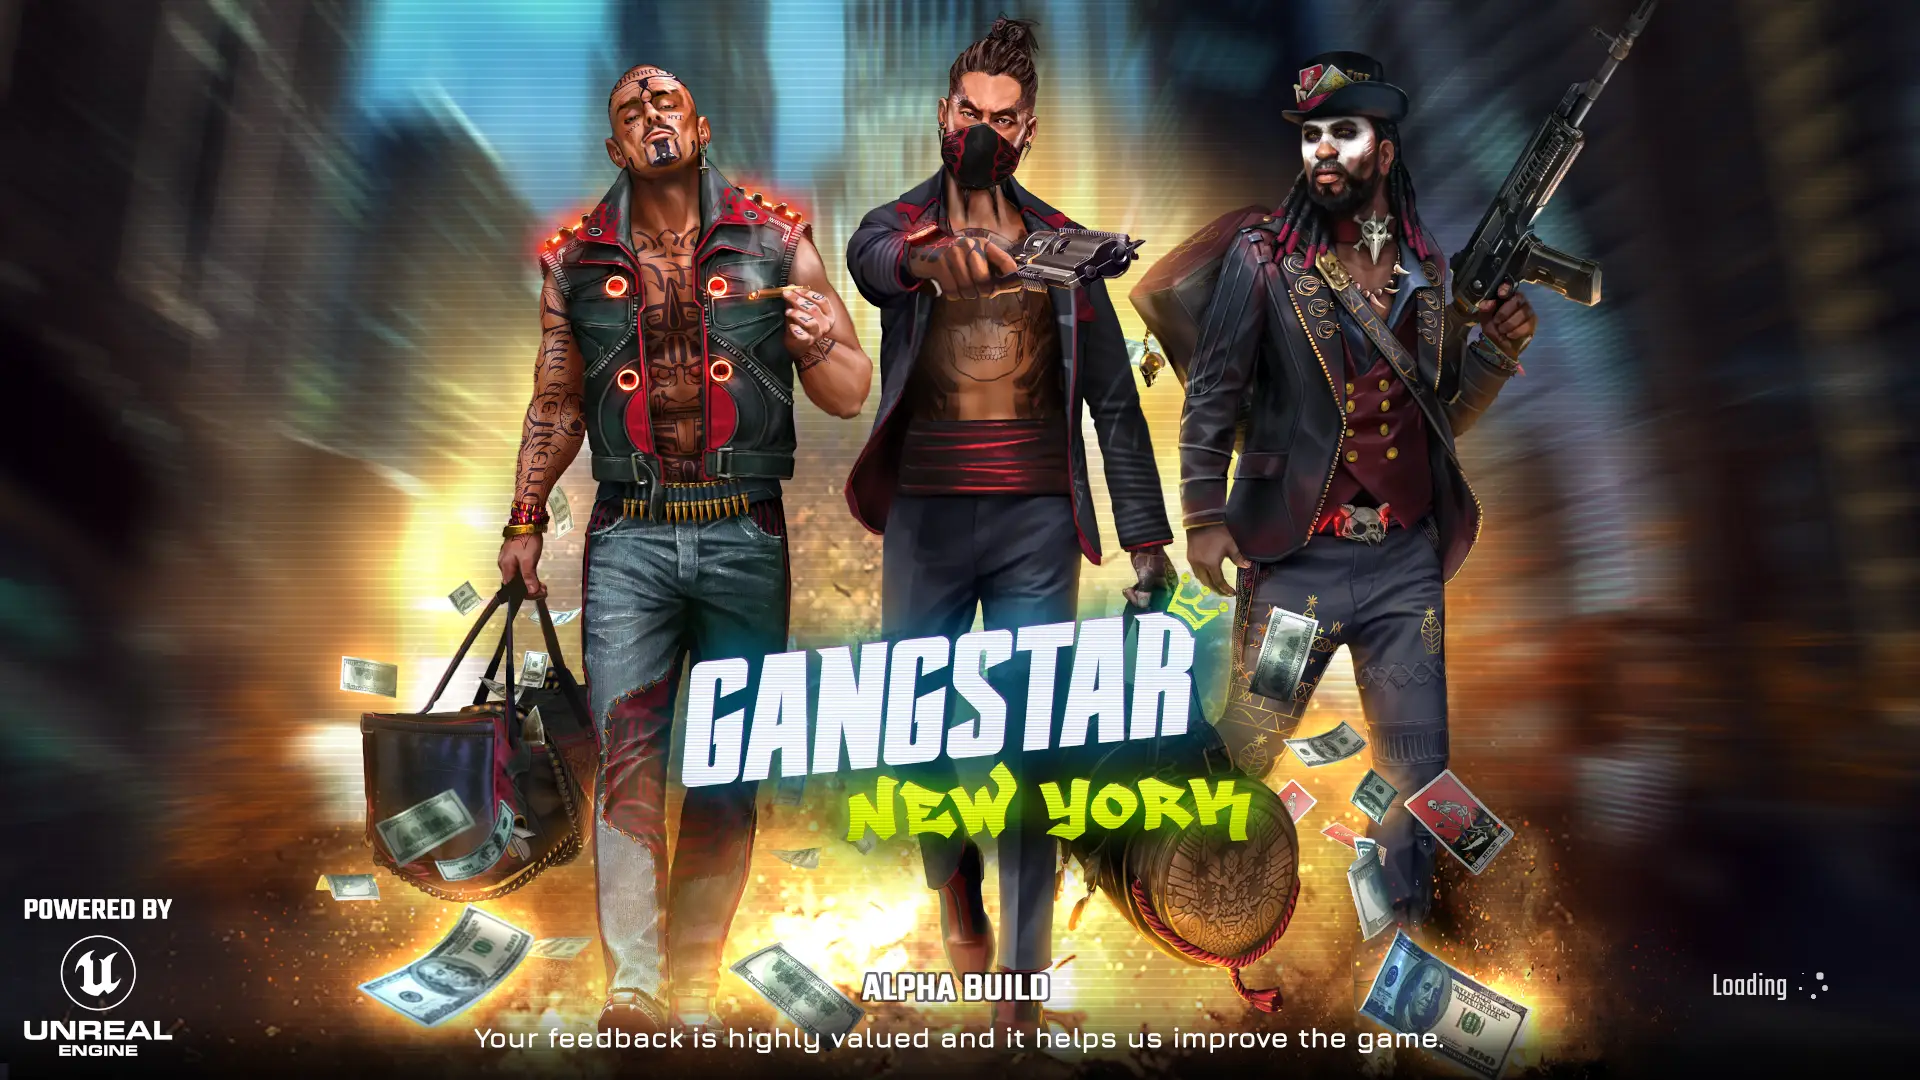 Tela título d Gangstar New York, mostrando 3 personagens